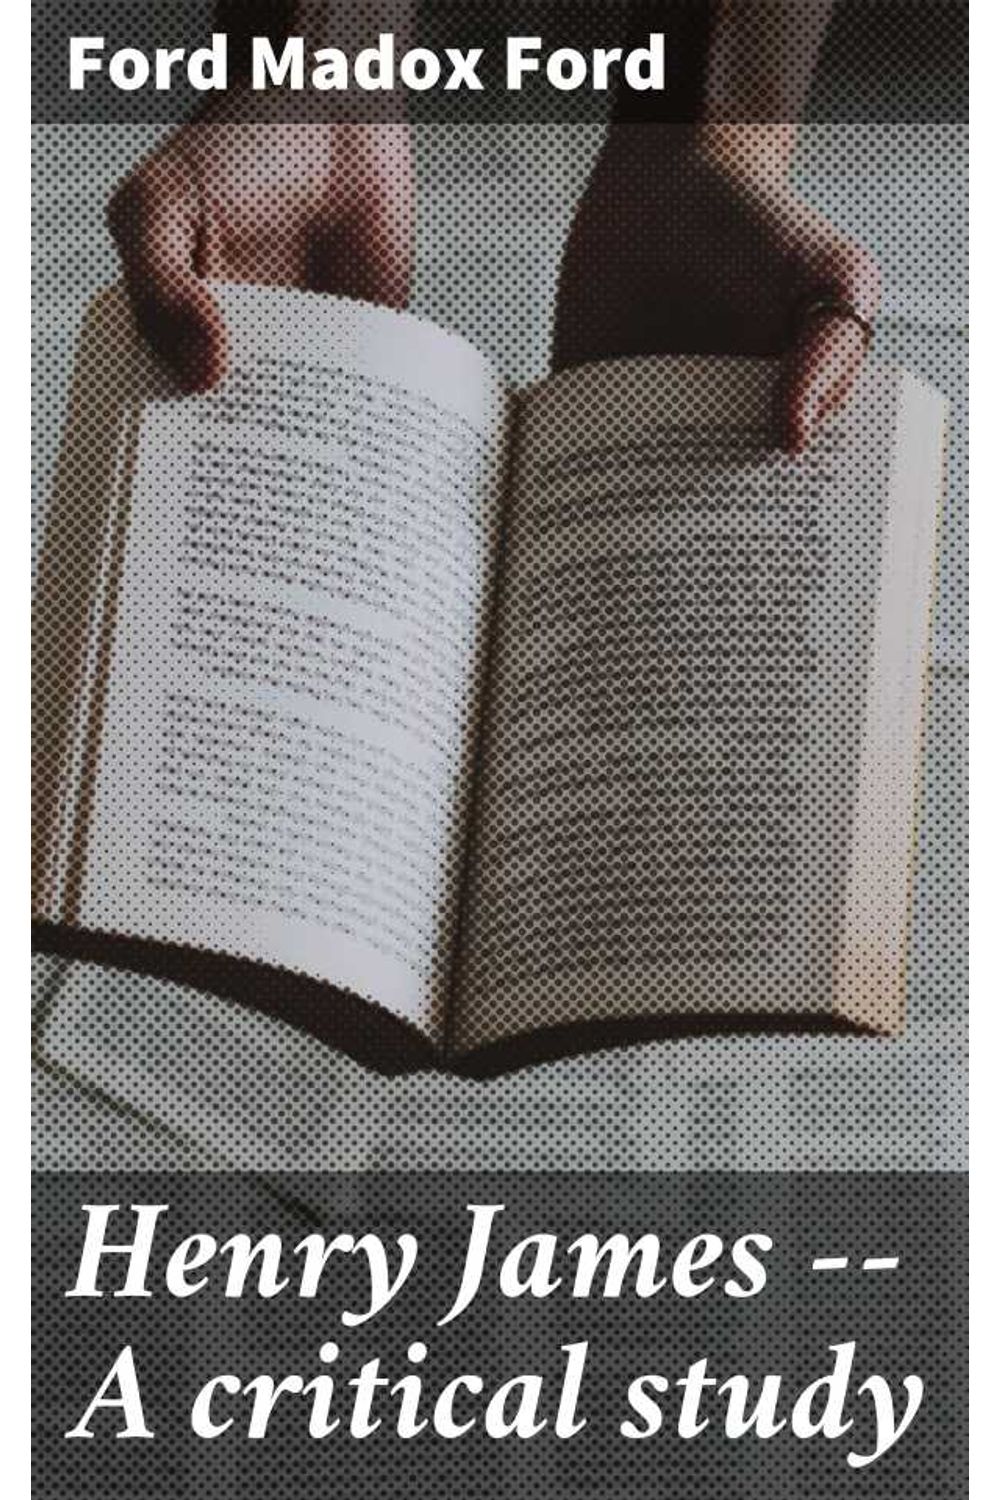 bw-henry-james-a-critical-study-good-press-4064066367299